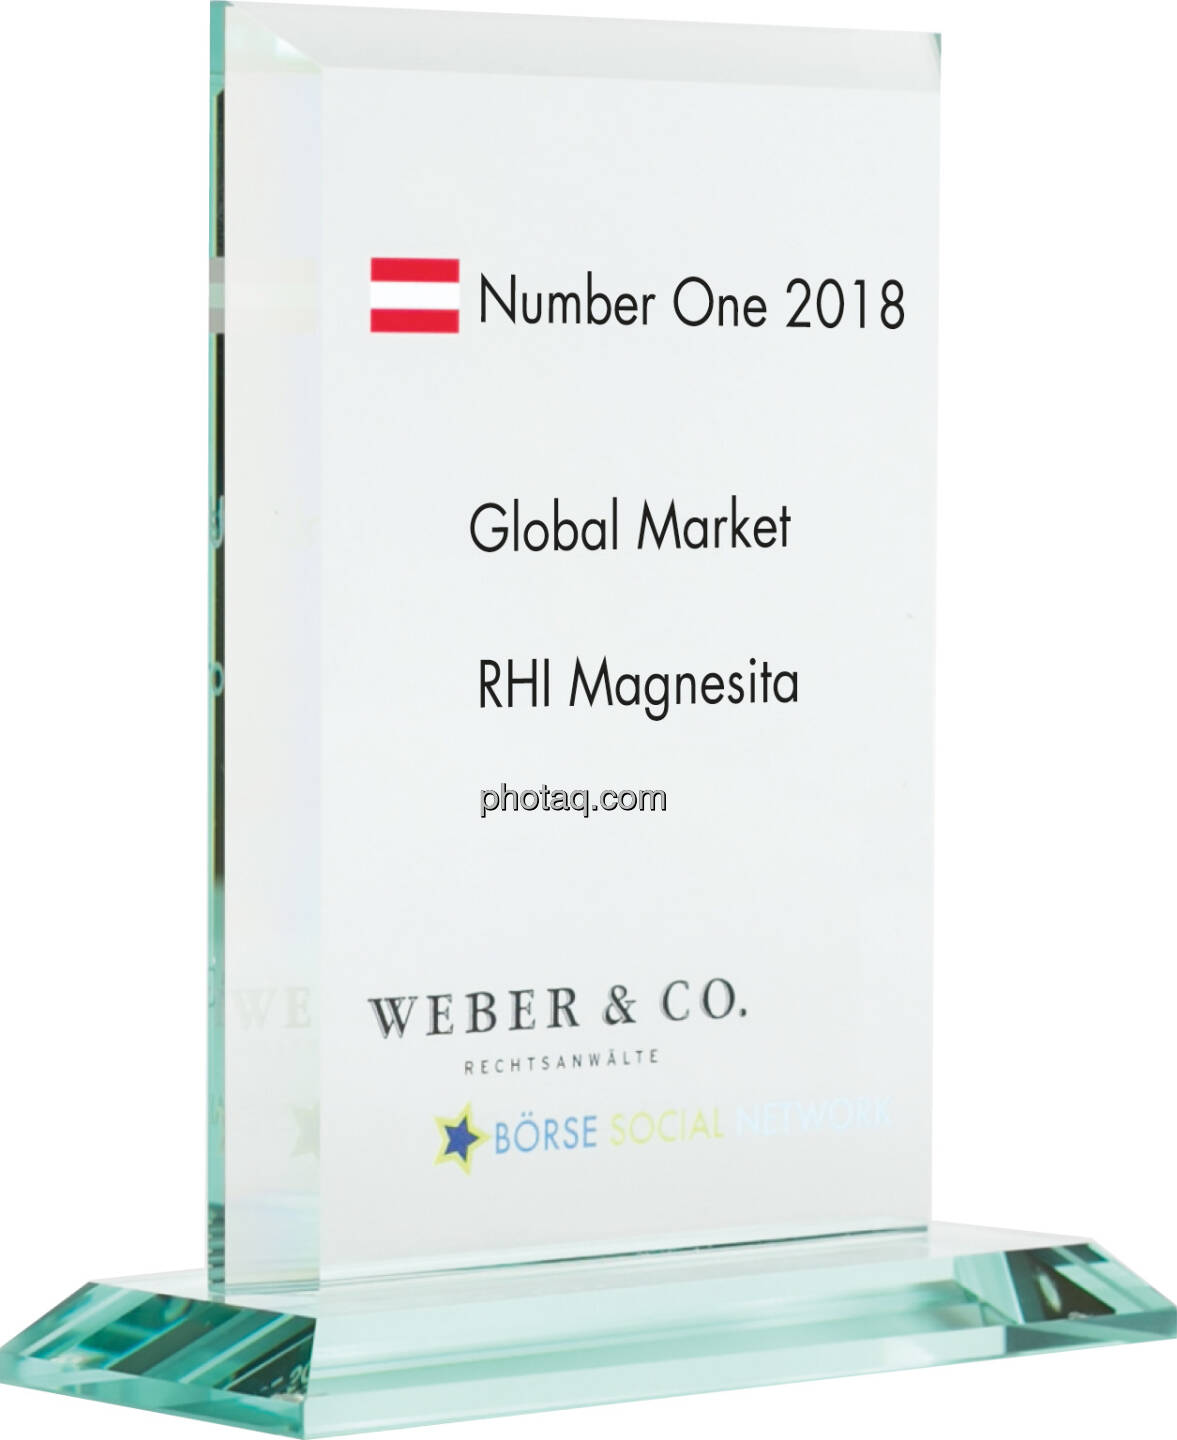 Number One Awards 2018 - Global Market RHI Magnesita